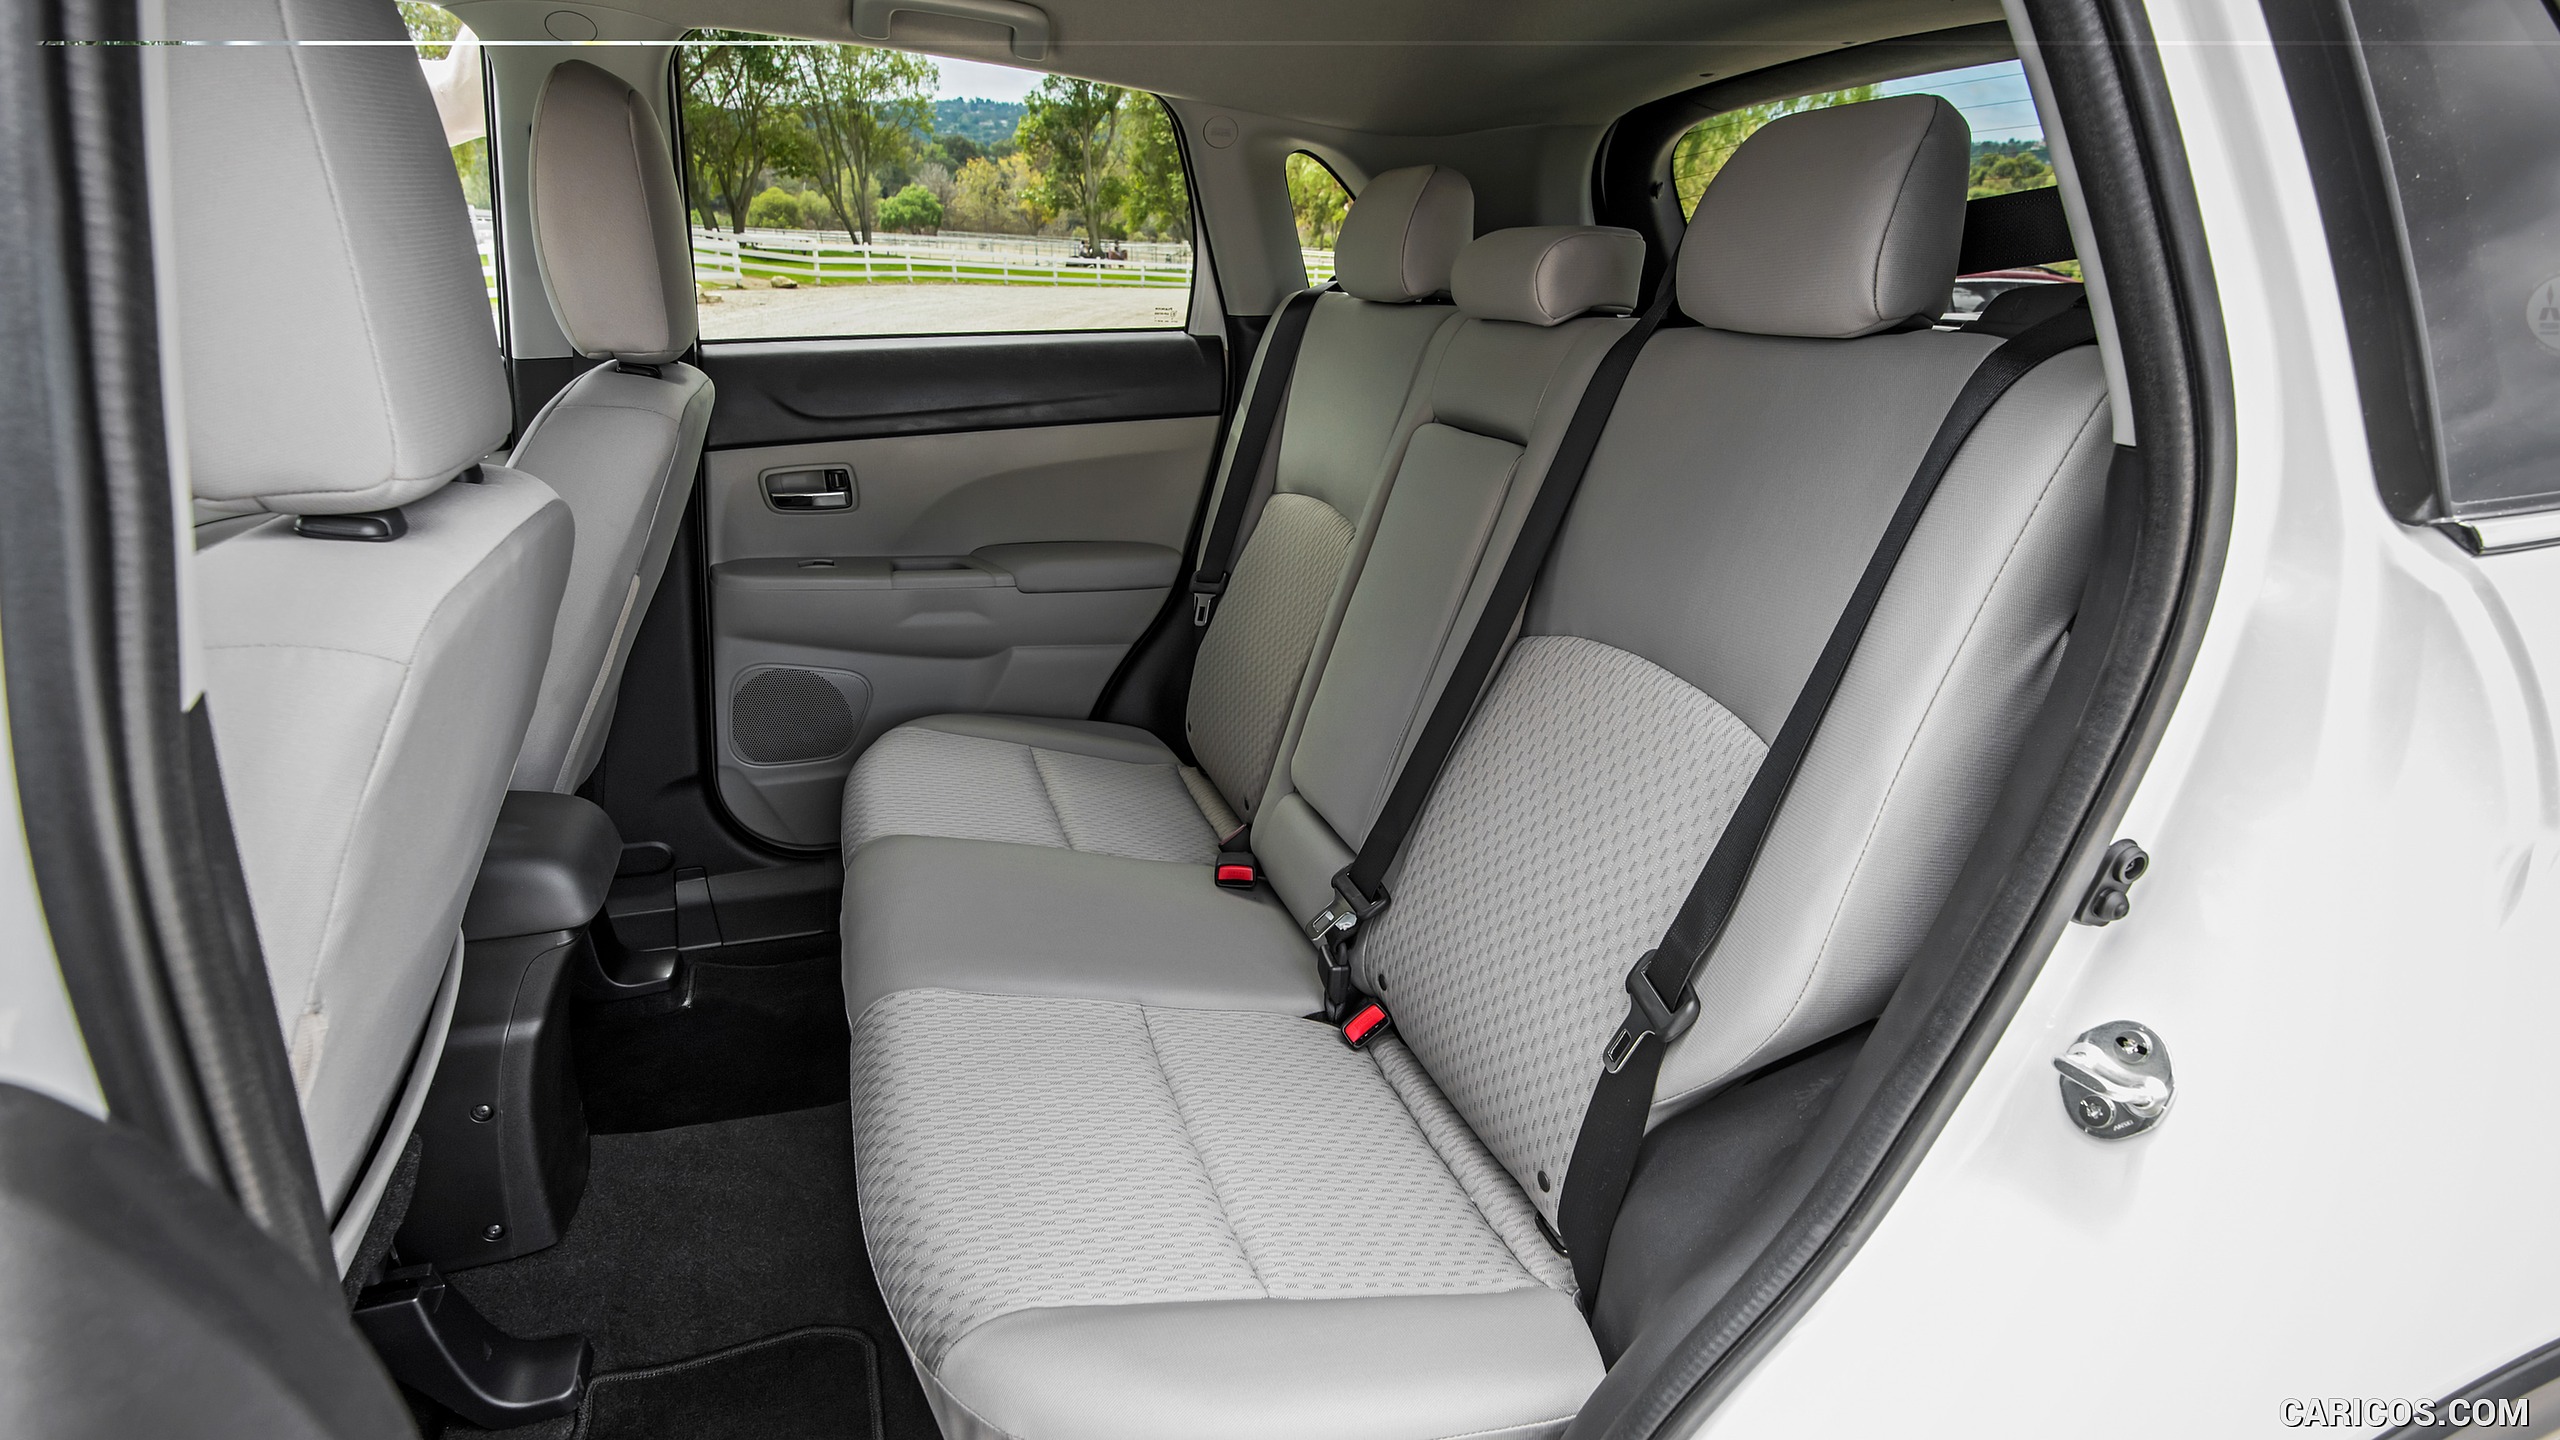 2016 Mitsubishi Outlander Sport SEL - Interior, Rear Seats, #49 of 79